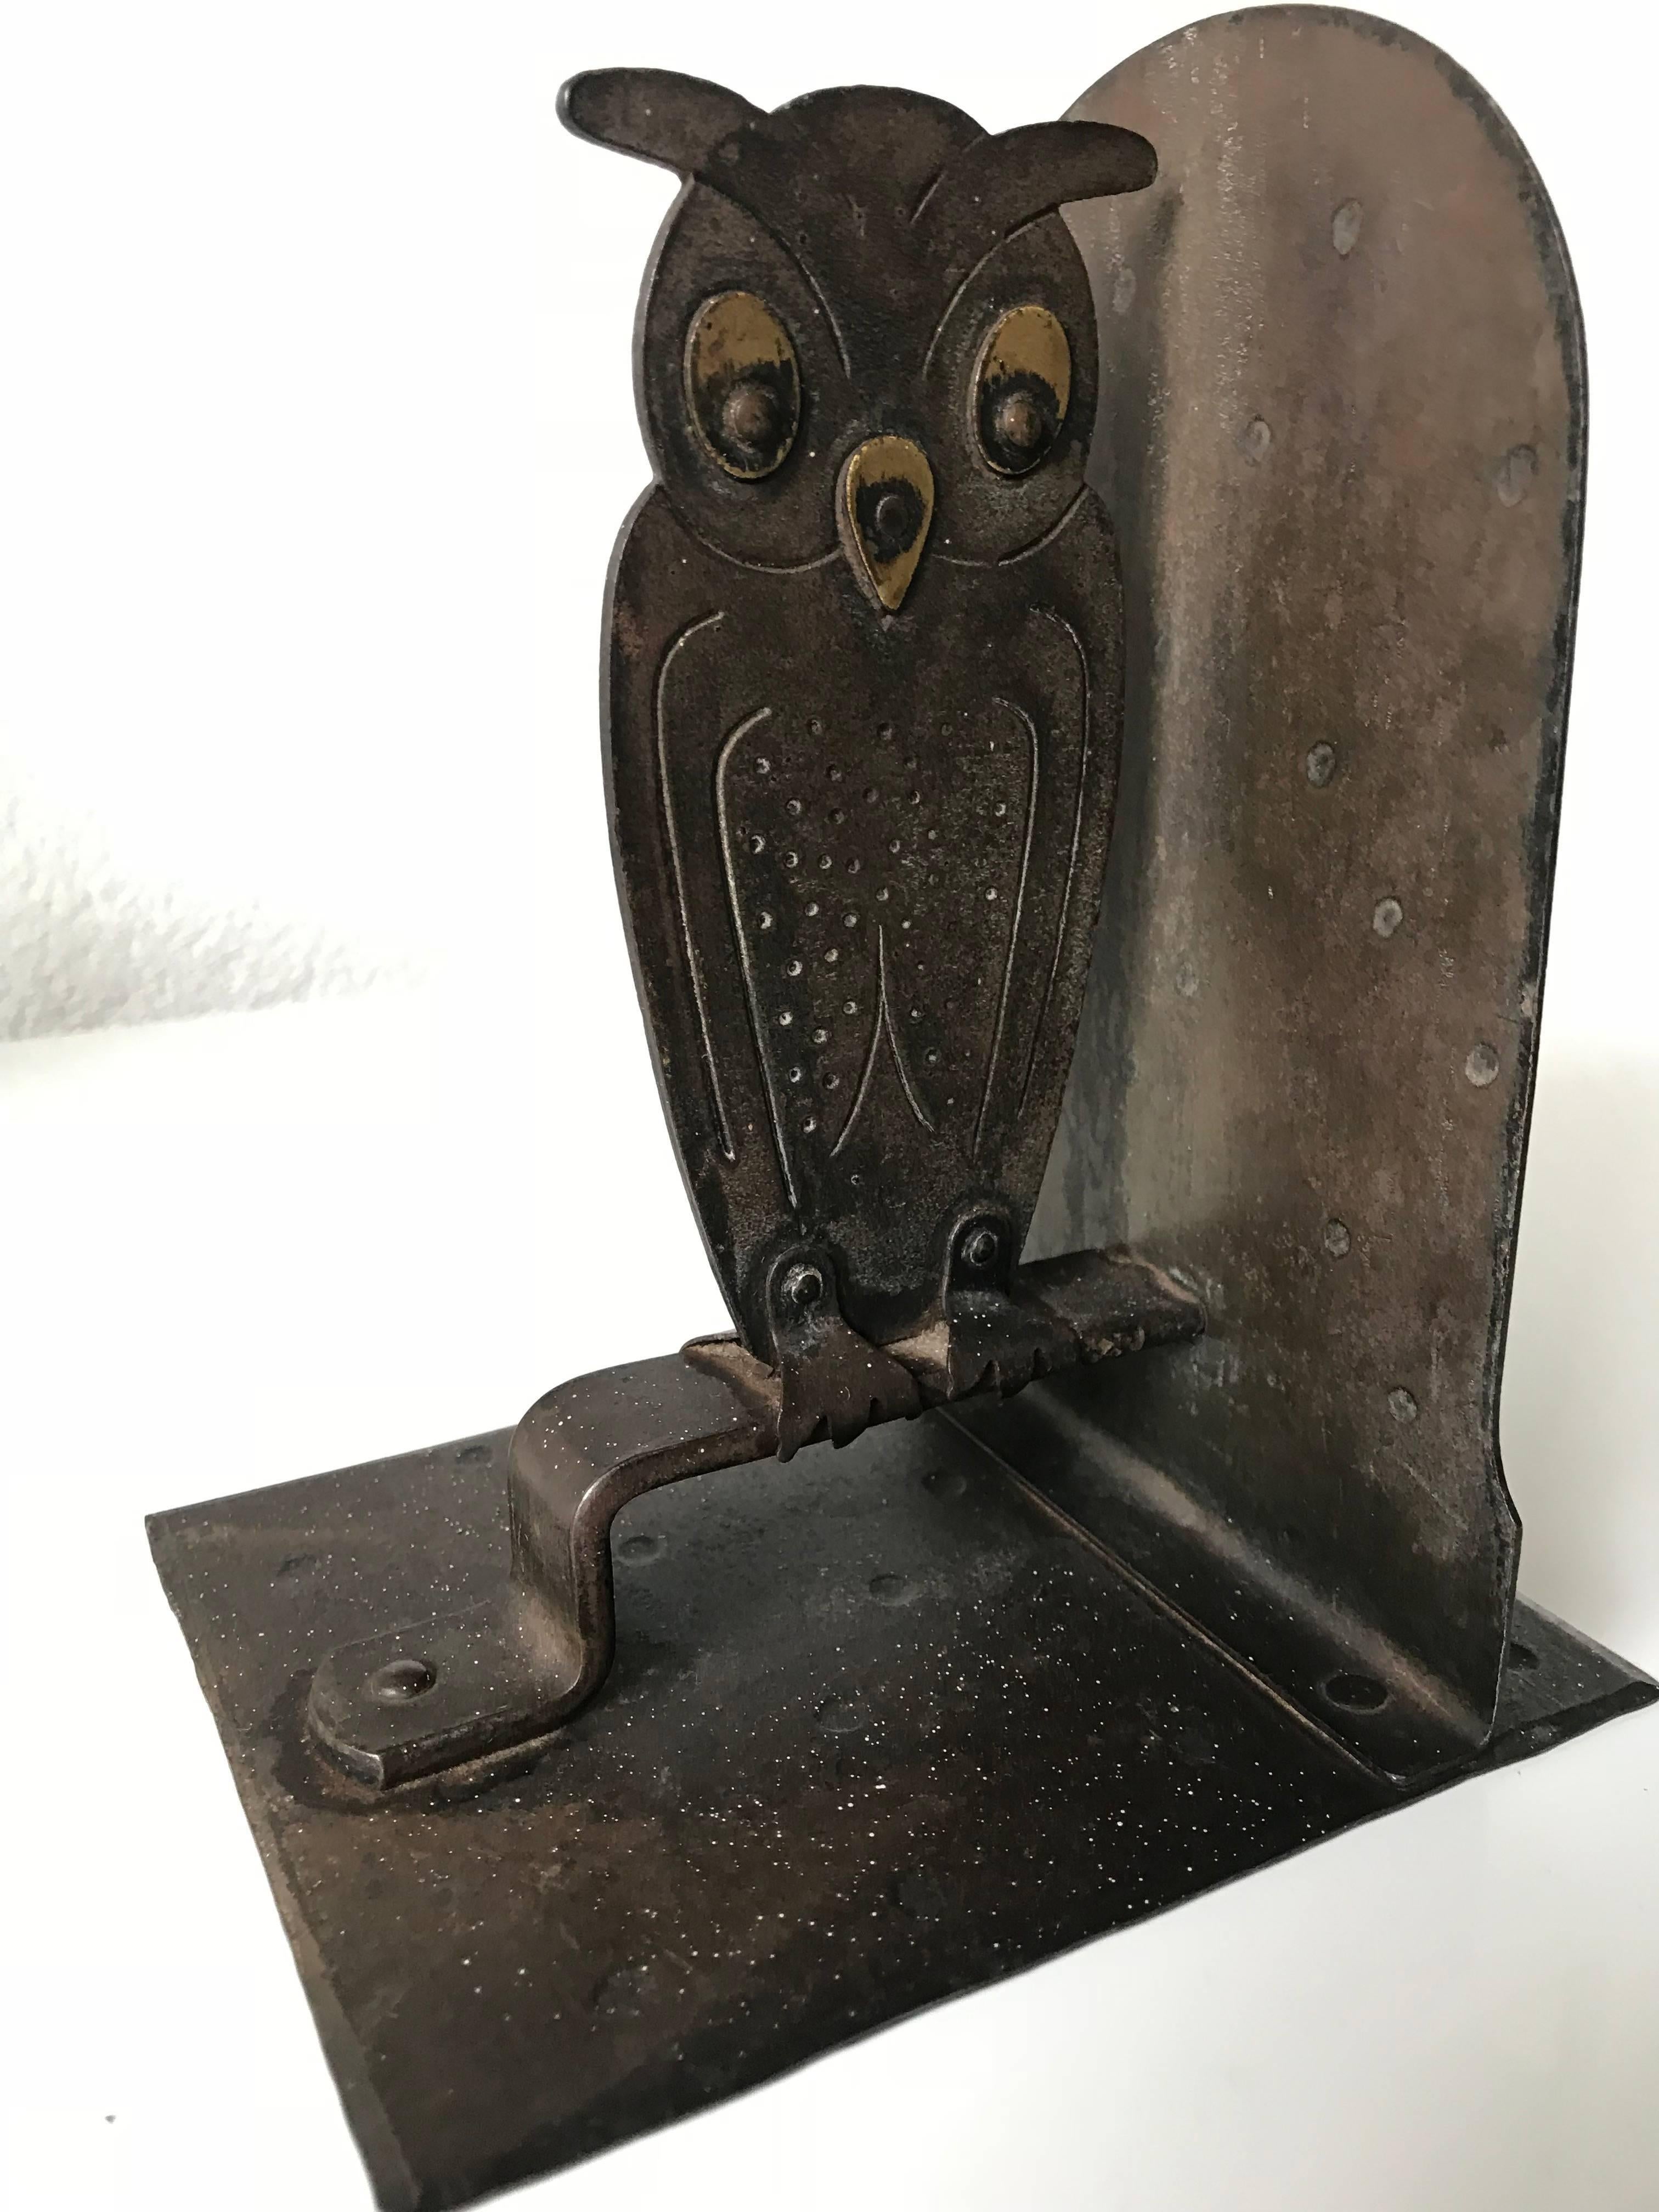 Patinated Vintage 1920s Hammered Metal Owl Bookend by Goberg, Hugo Berger, Germany